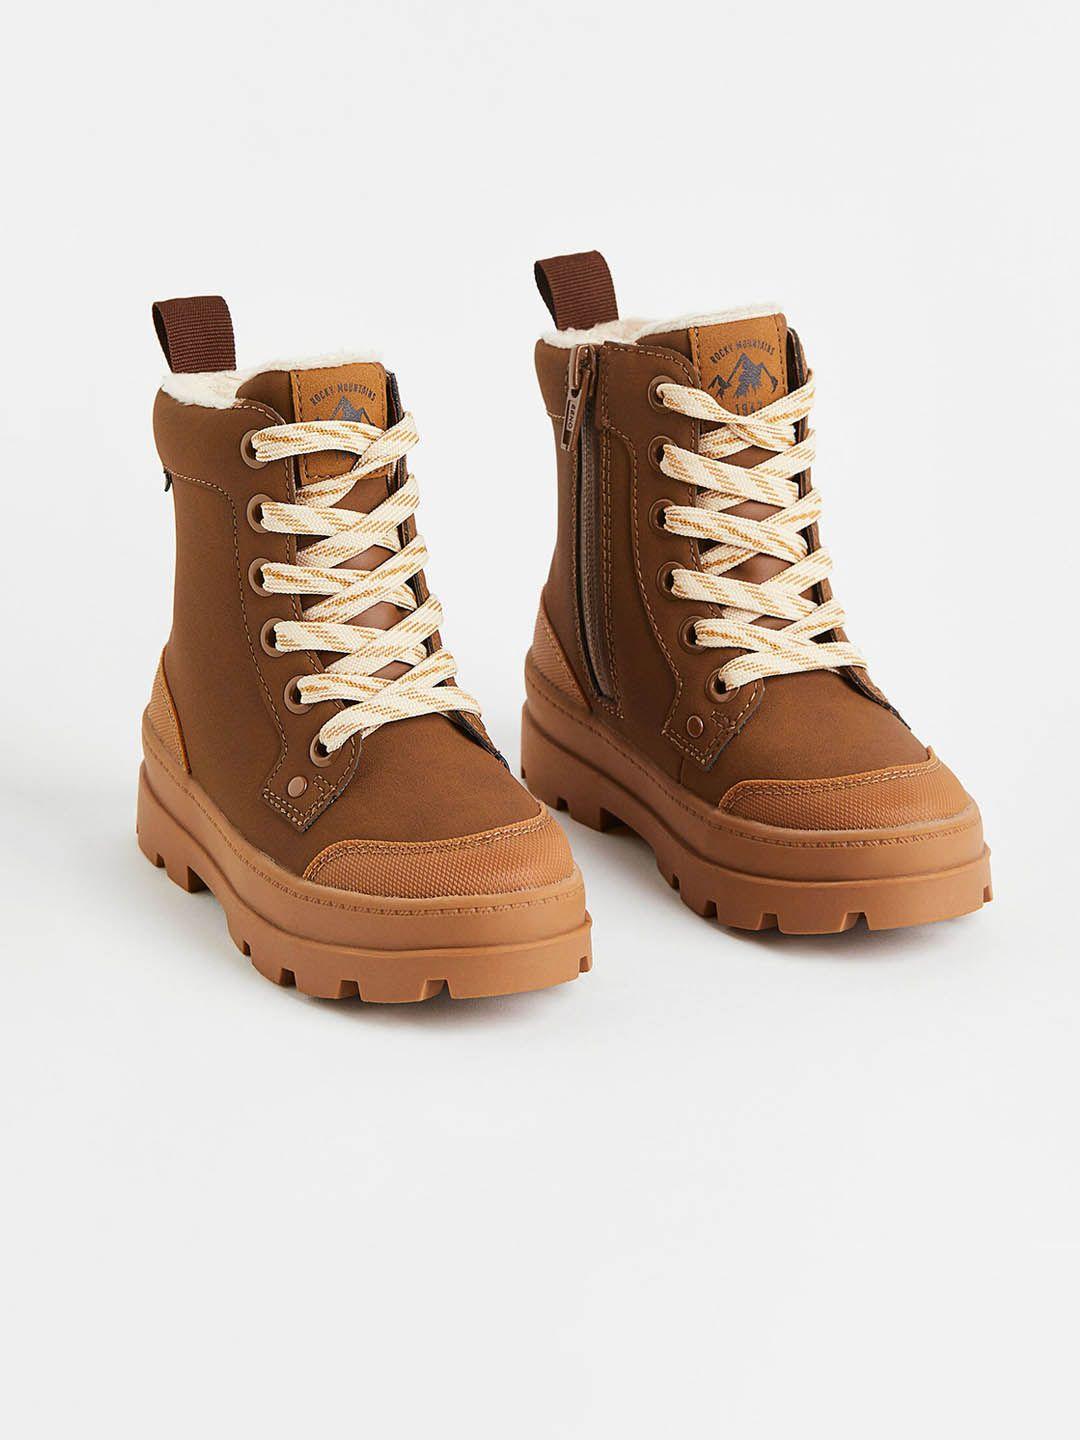 h&m girls waterproof boots